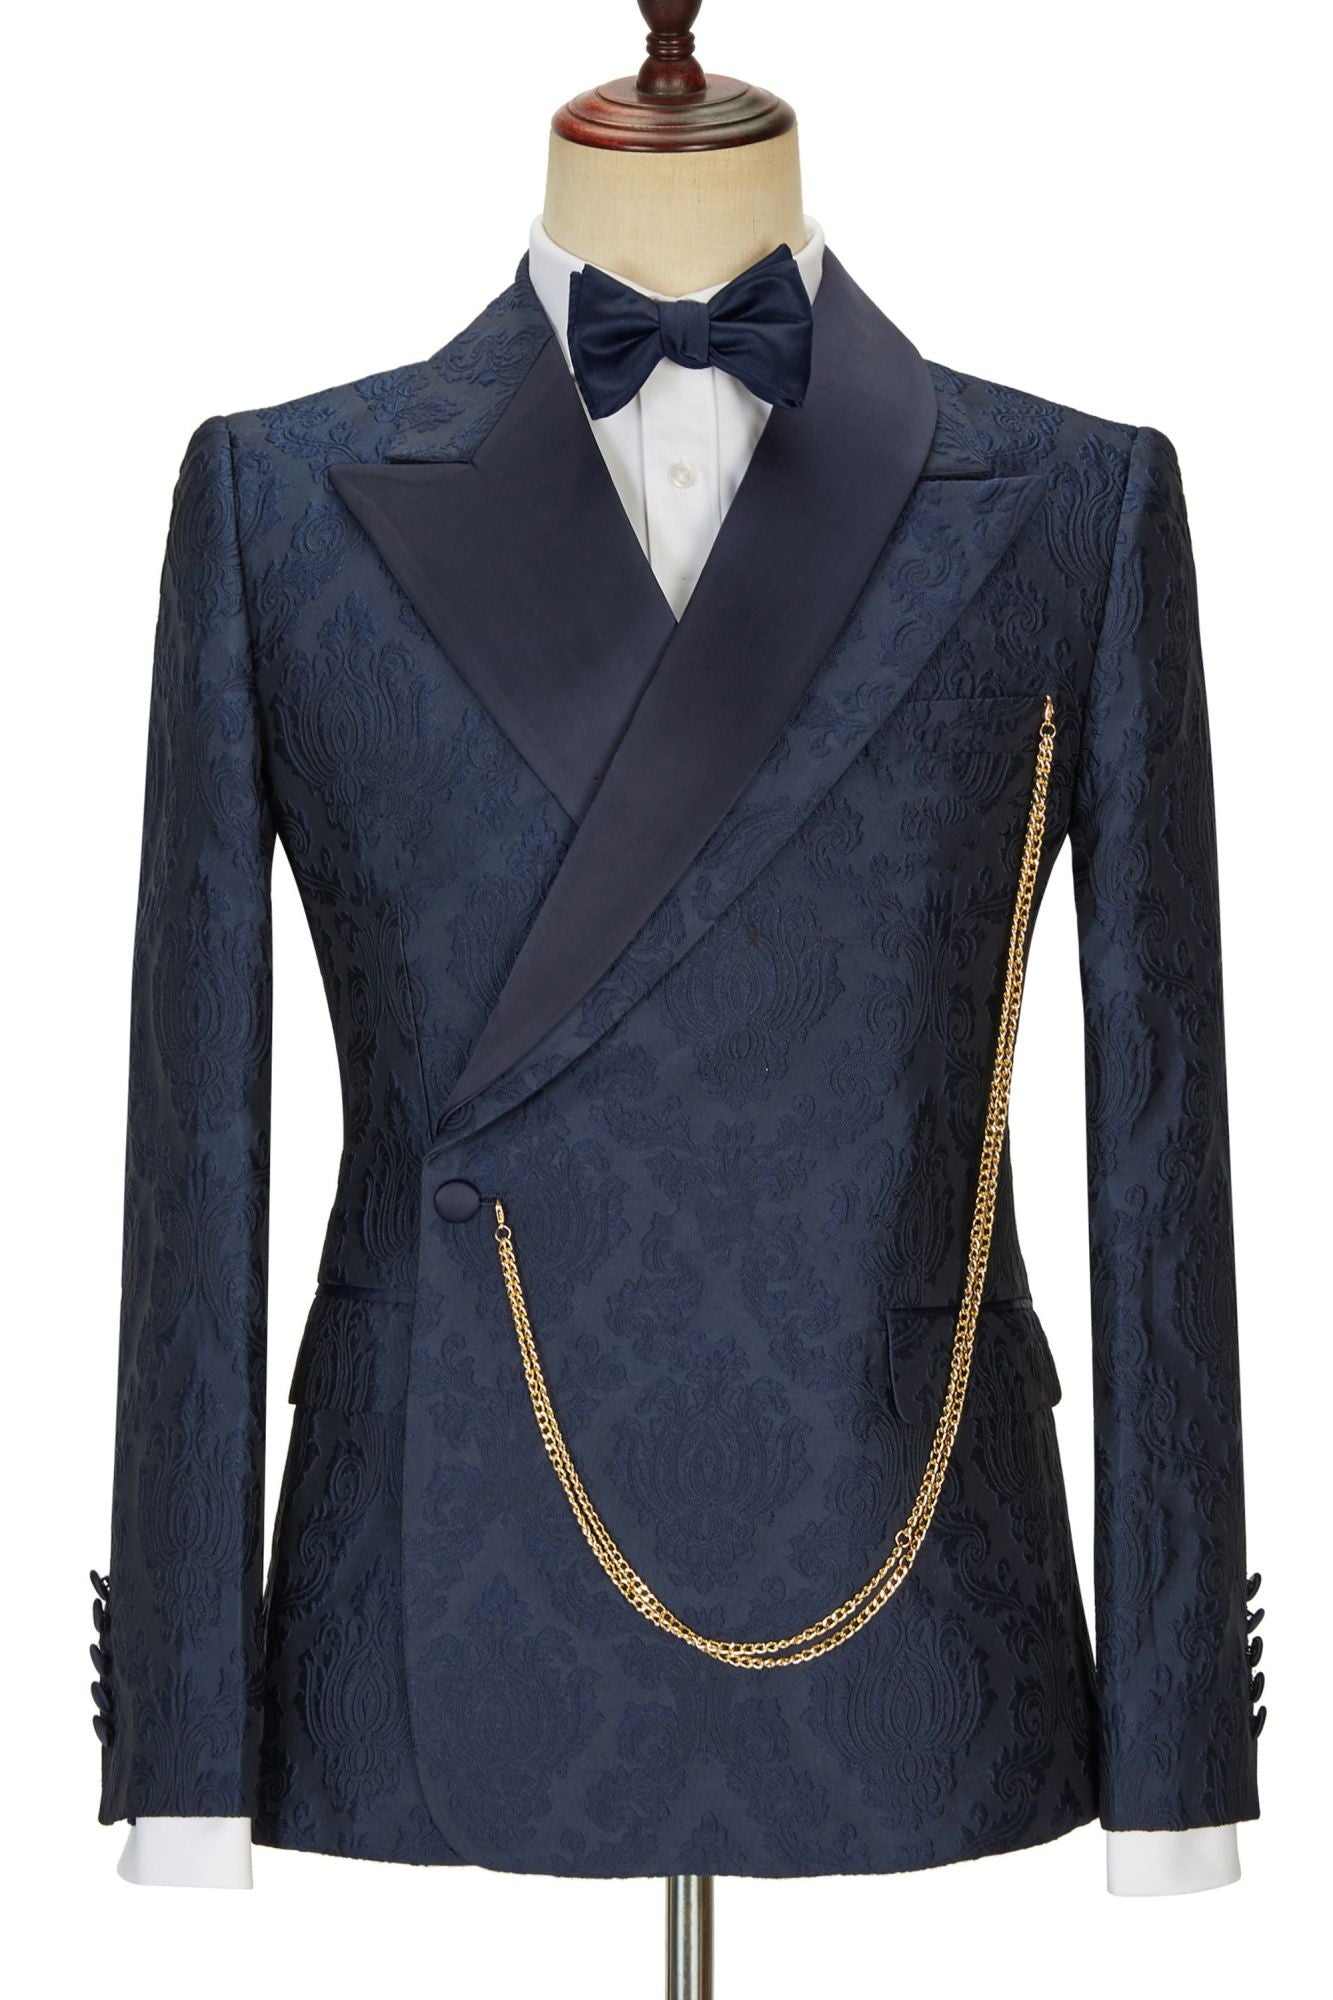 New Arrival Navy Blue Slim Fit Jacquard Peaked Lapel Wedding Suit for Men by Brandon-Wedding Suits-BallBride